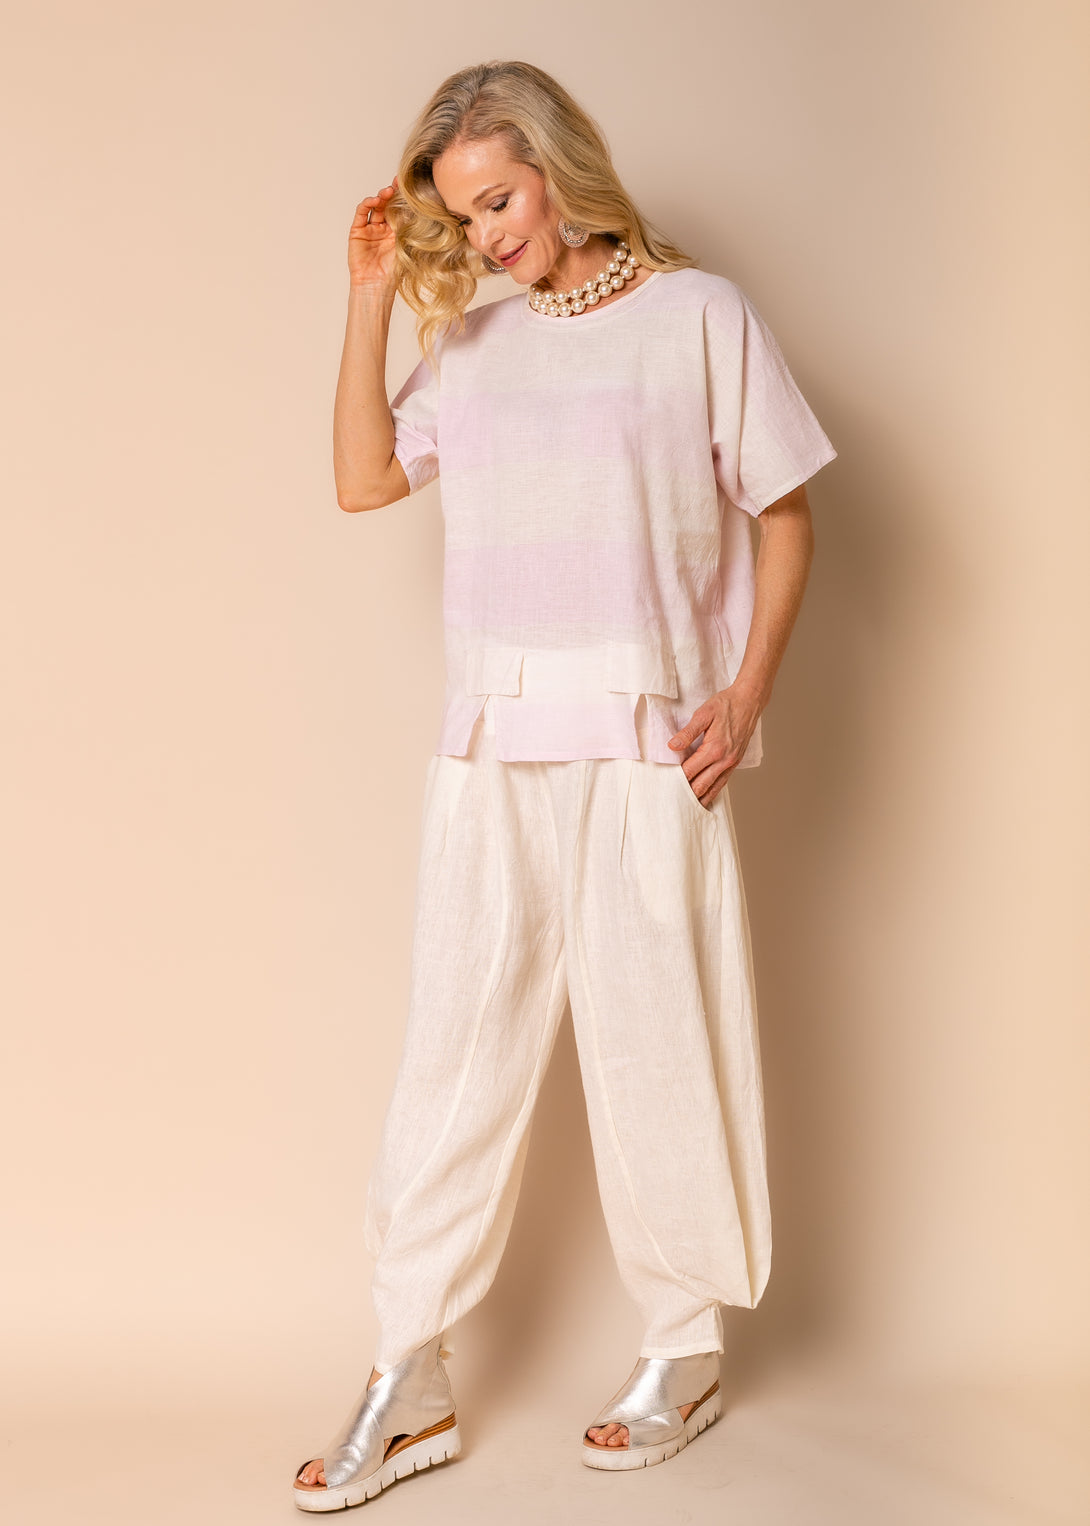 Bonnie Linen Blend Top in Blush - Imagine Fashion